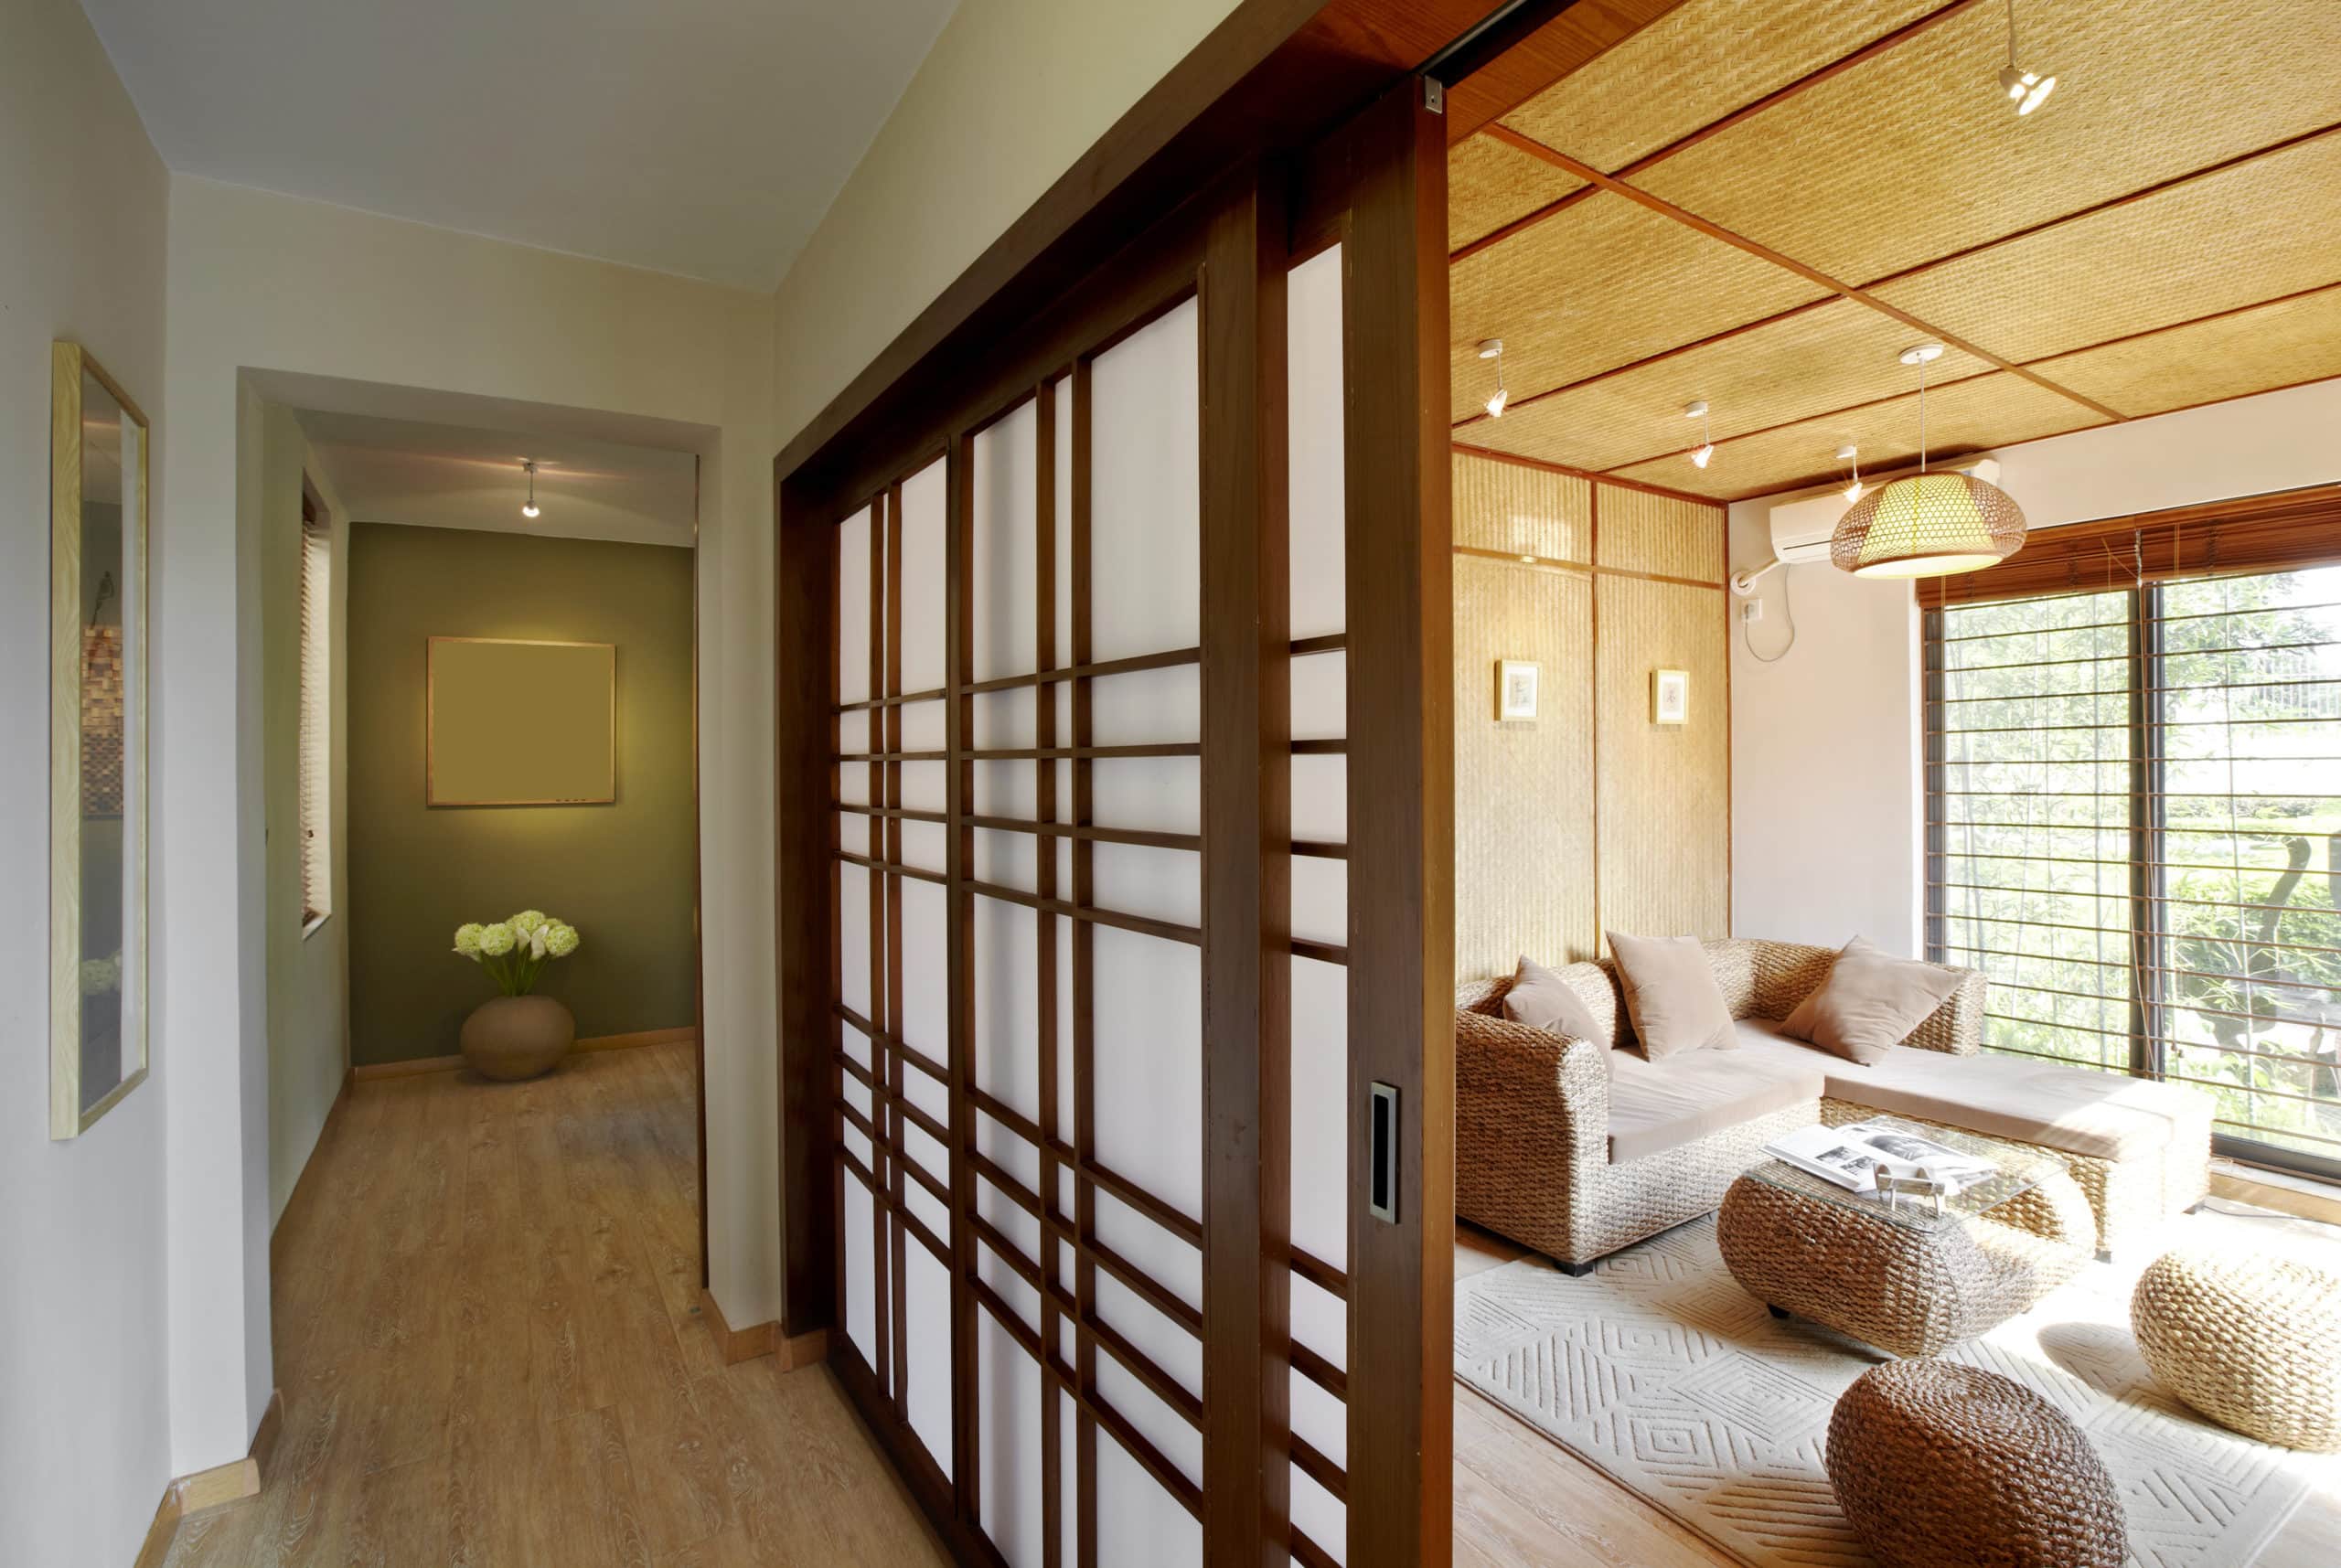 Asian Zen interior design styles